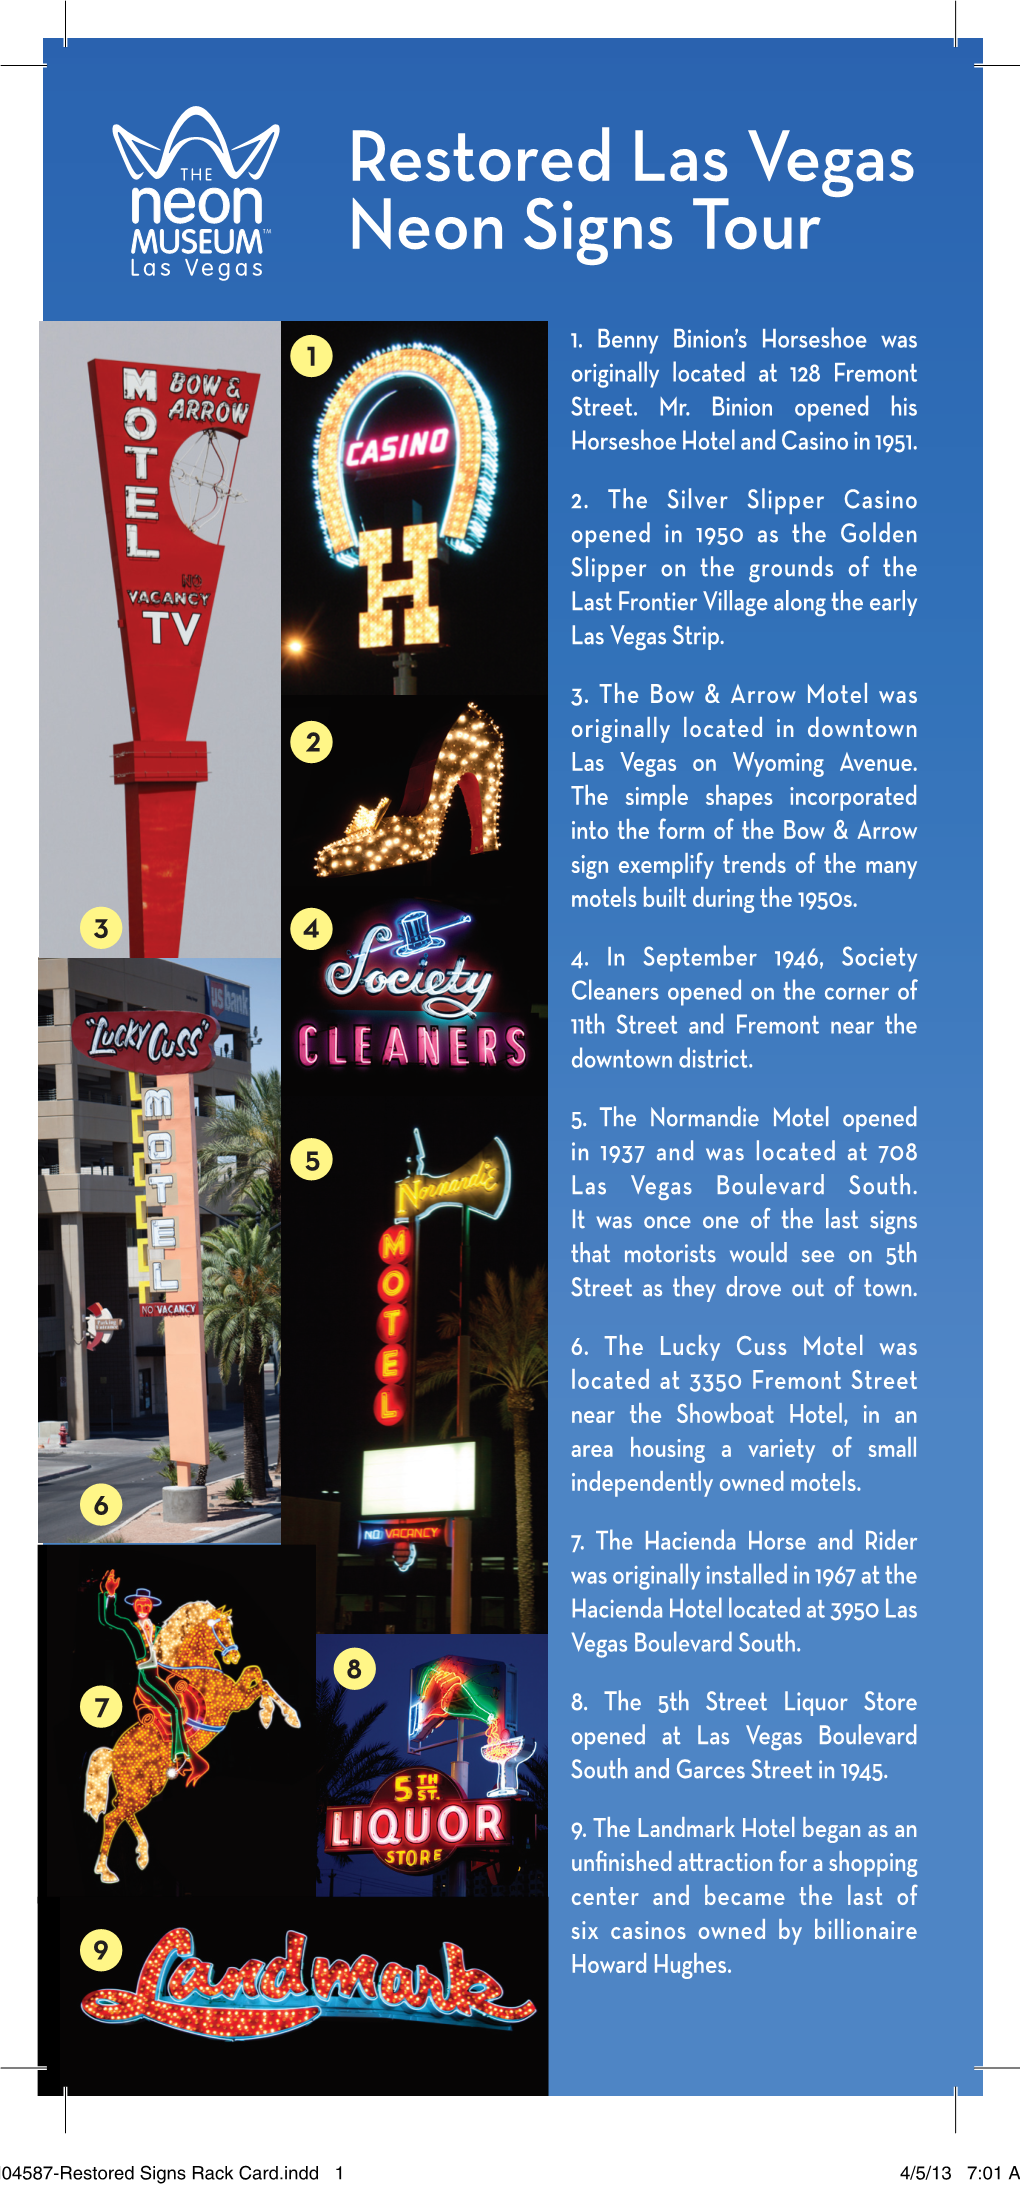 Restored Las Vegas Neon Signs Tour